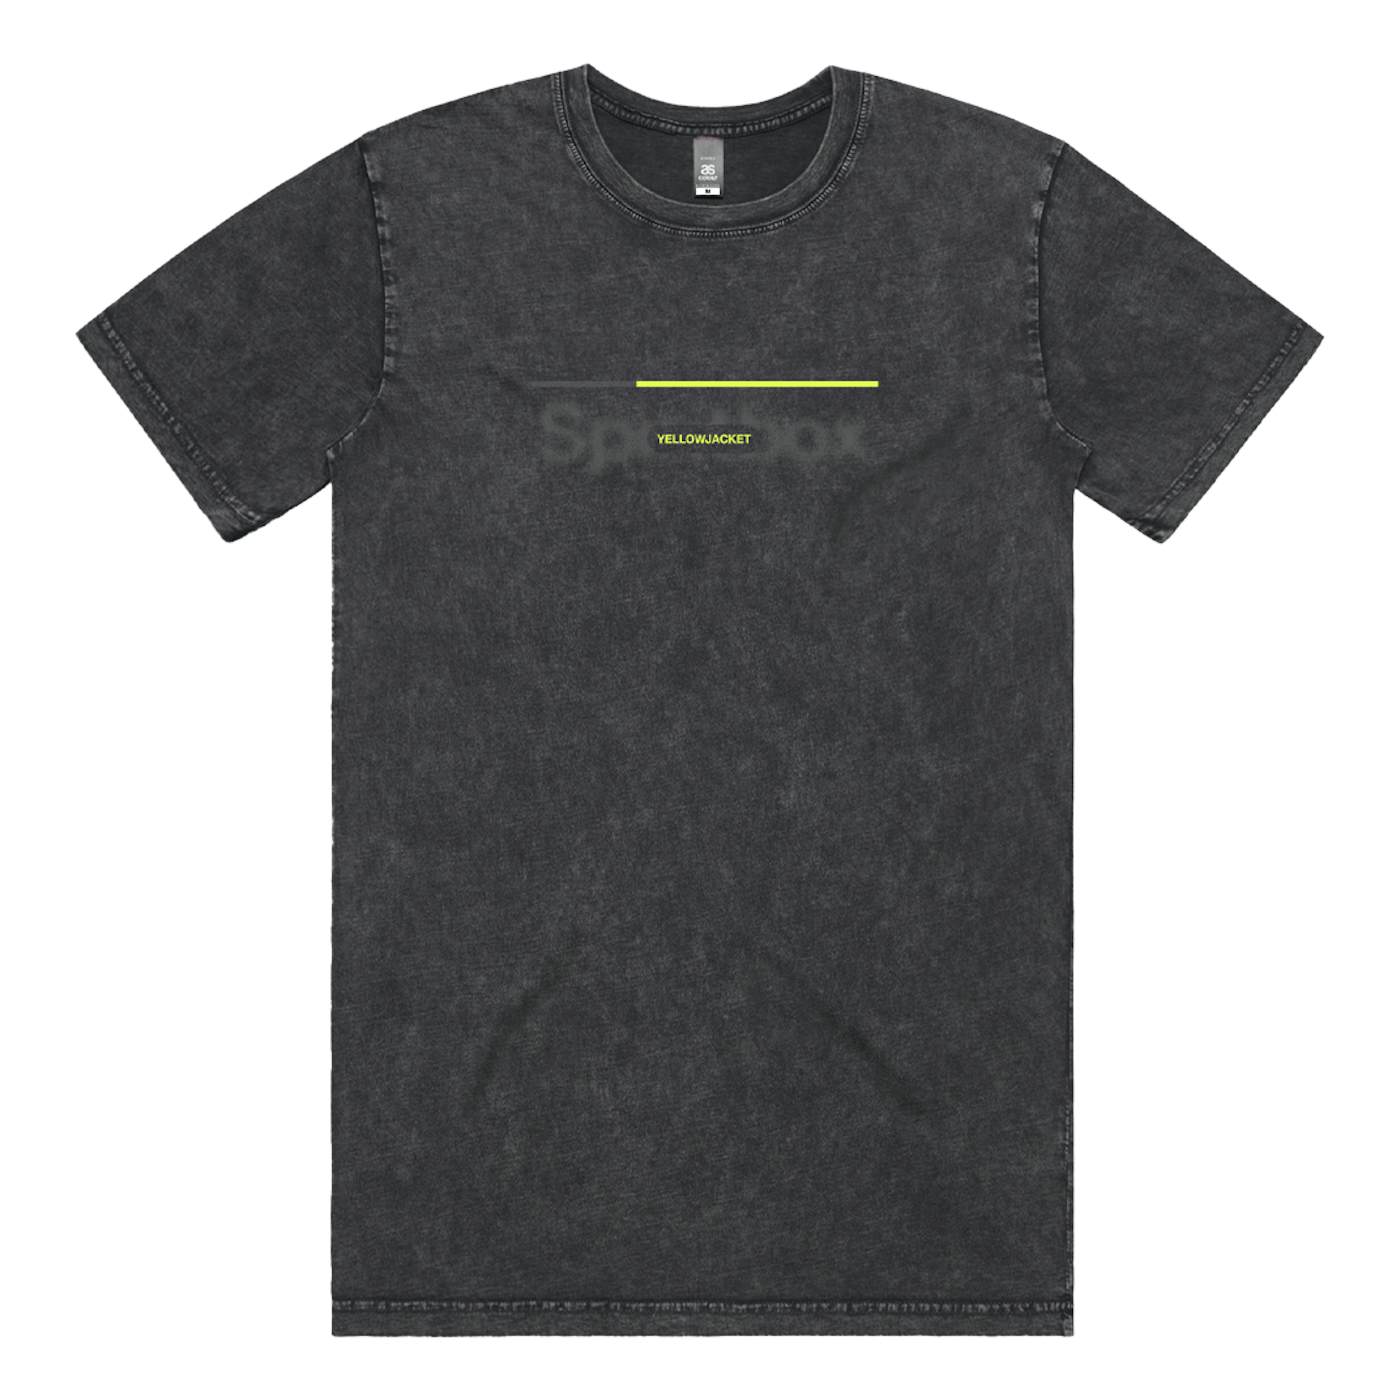 Spiritbox "Yellowjacket" T-Shirt